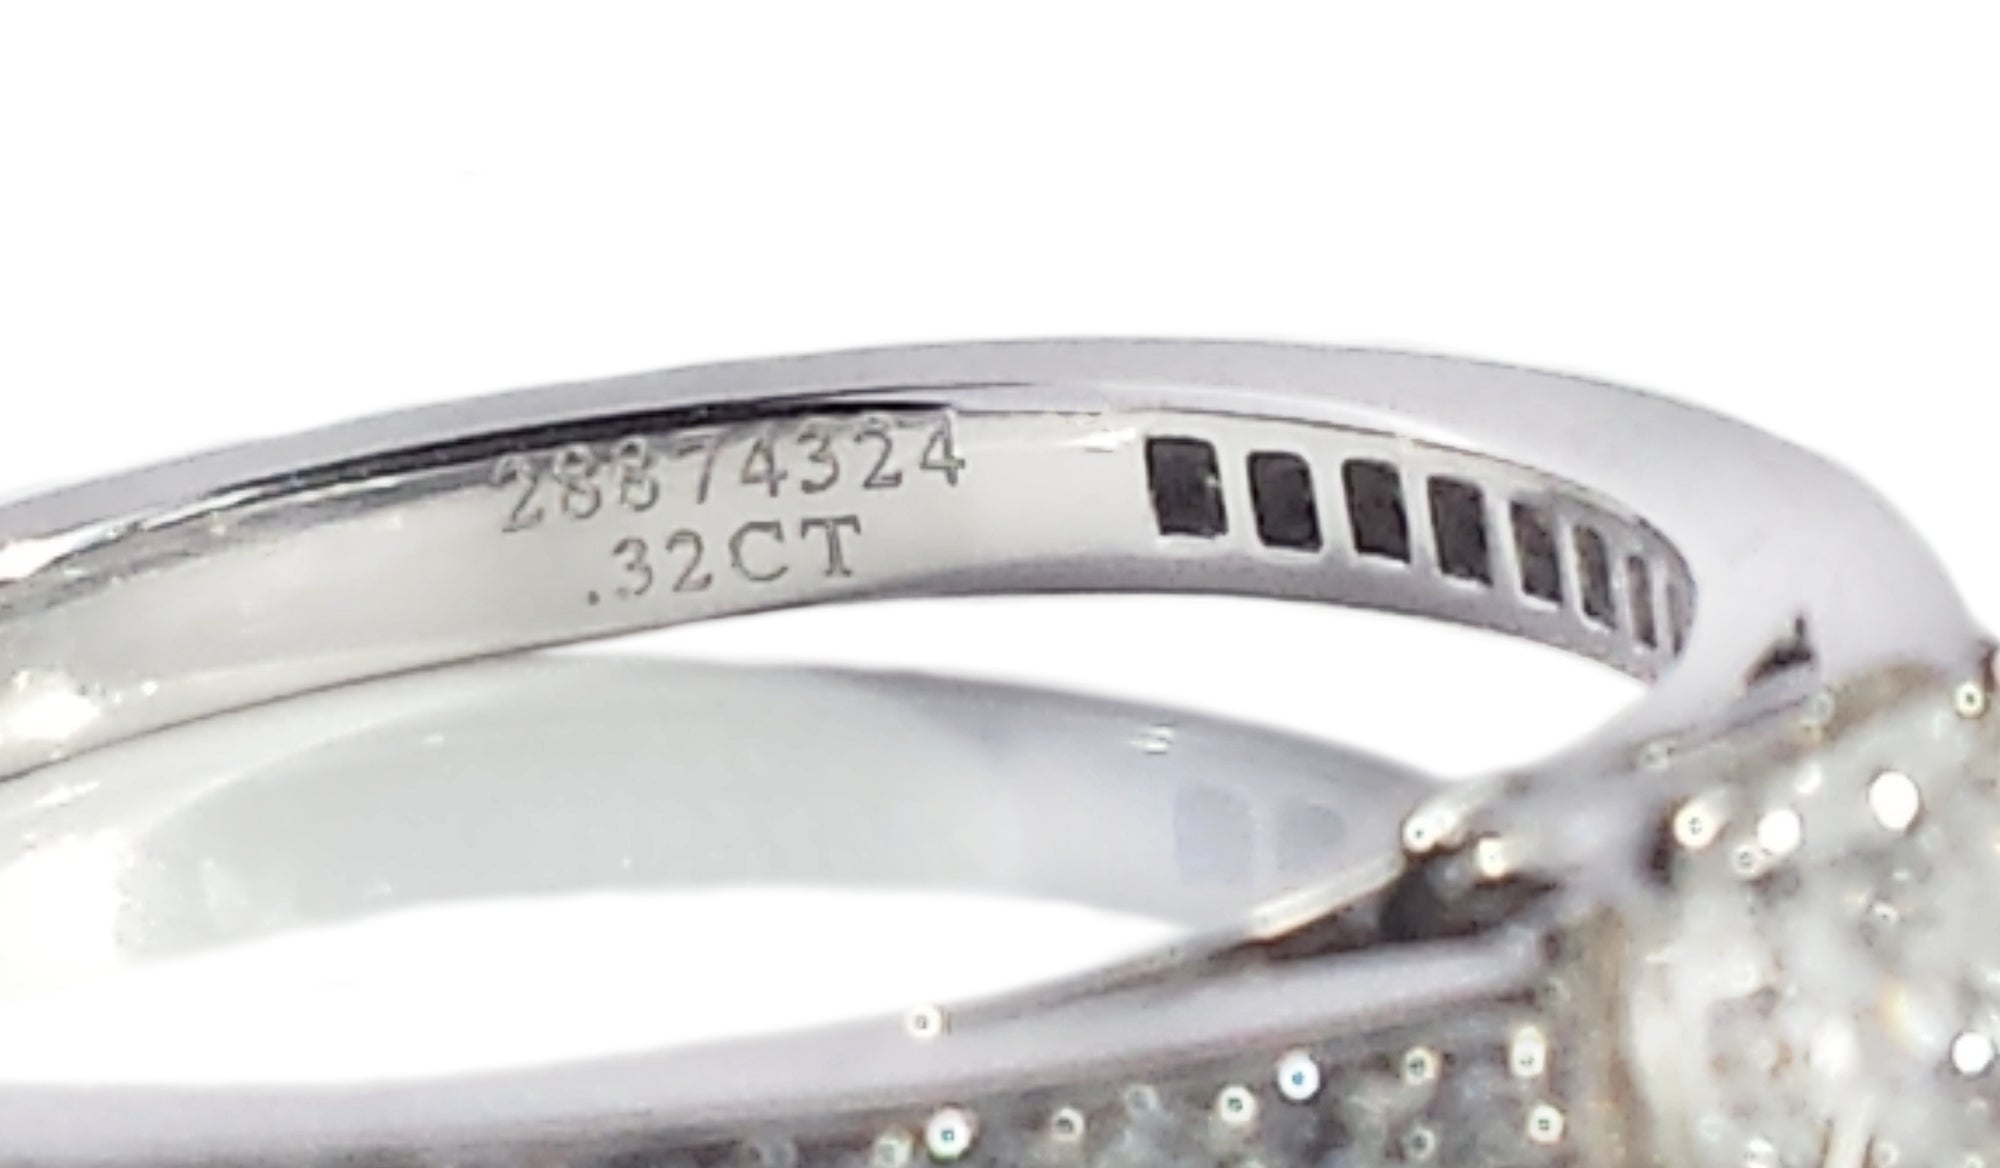 Tiffany & Co. 0.47tcw E/VS1 Grace Princess Cut Diamond Engagement Ring